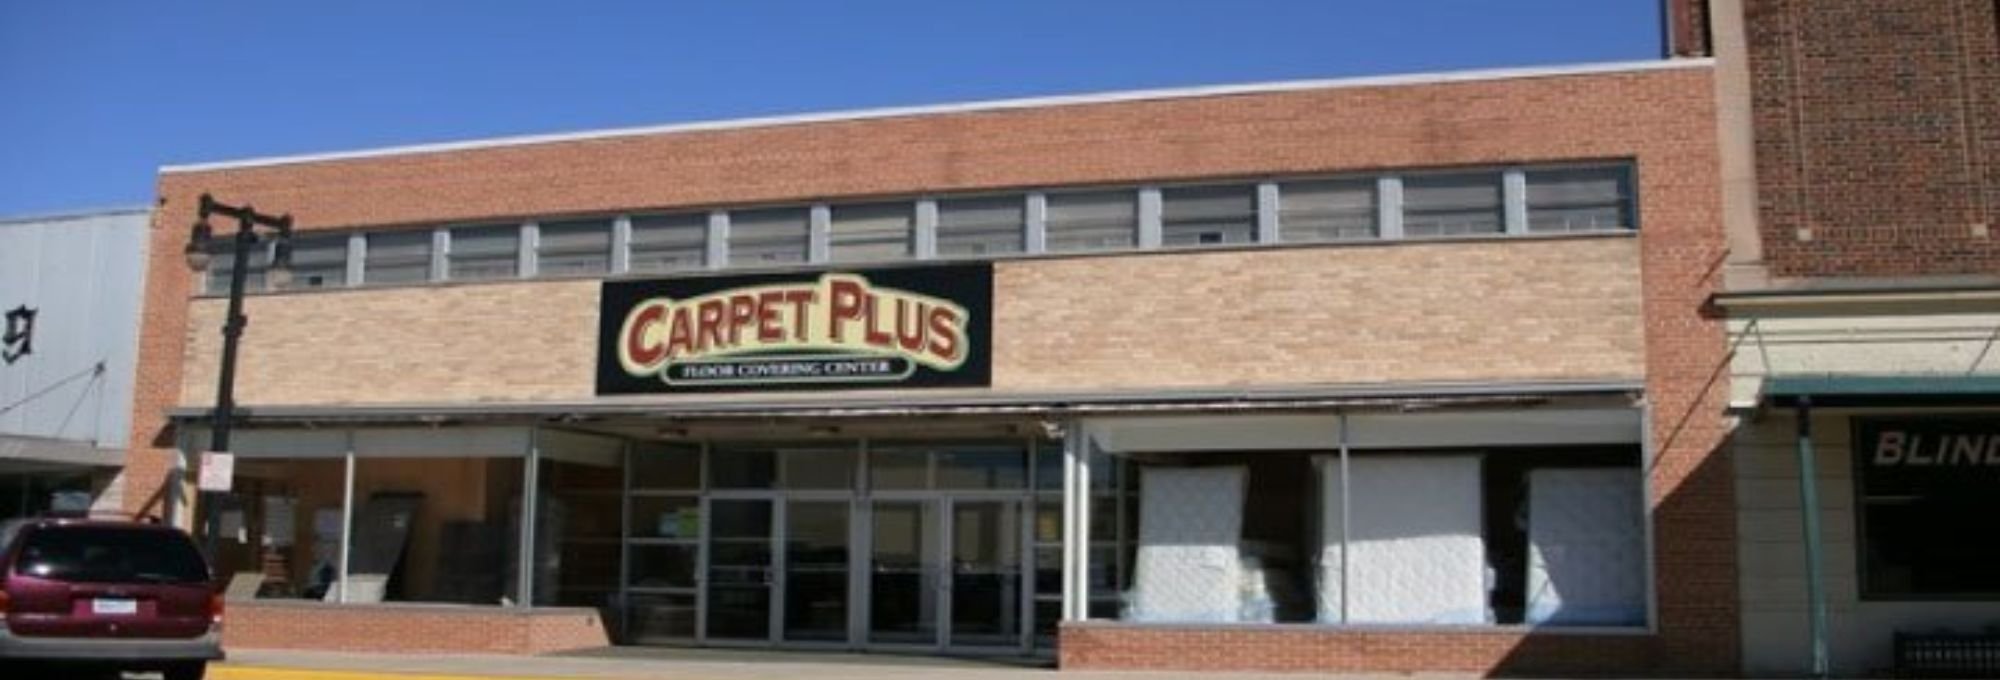 Carpet Plus storefront - Carpet Plus in the Worthington, MN area